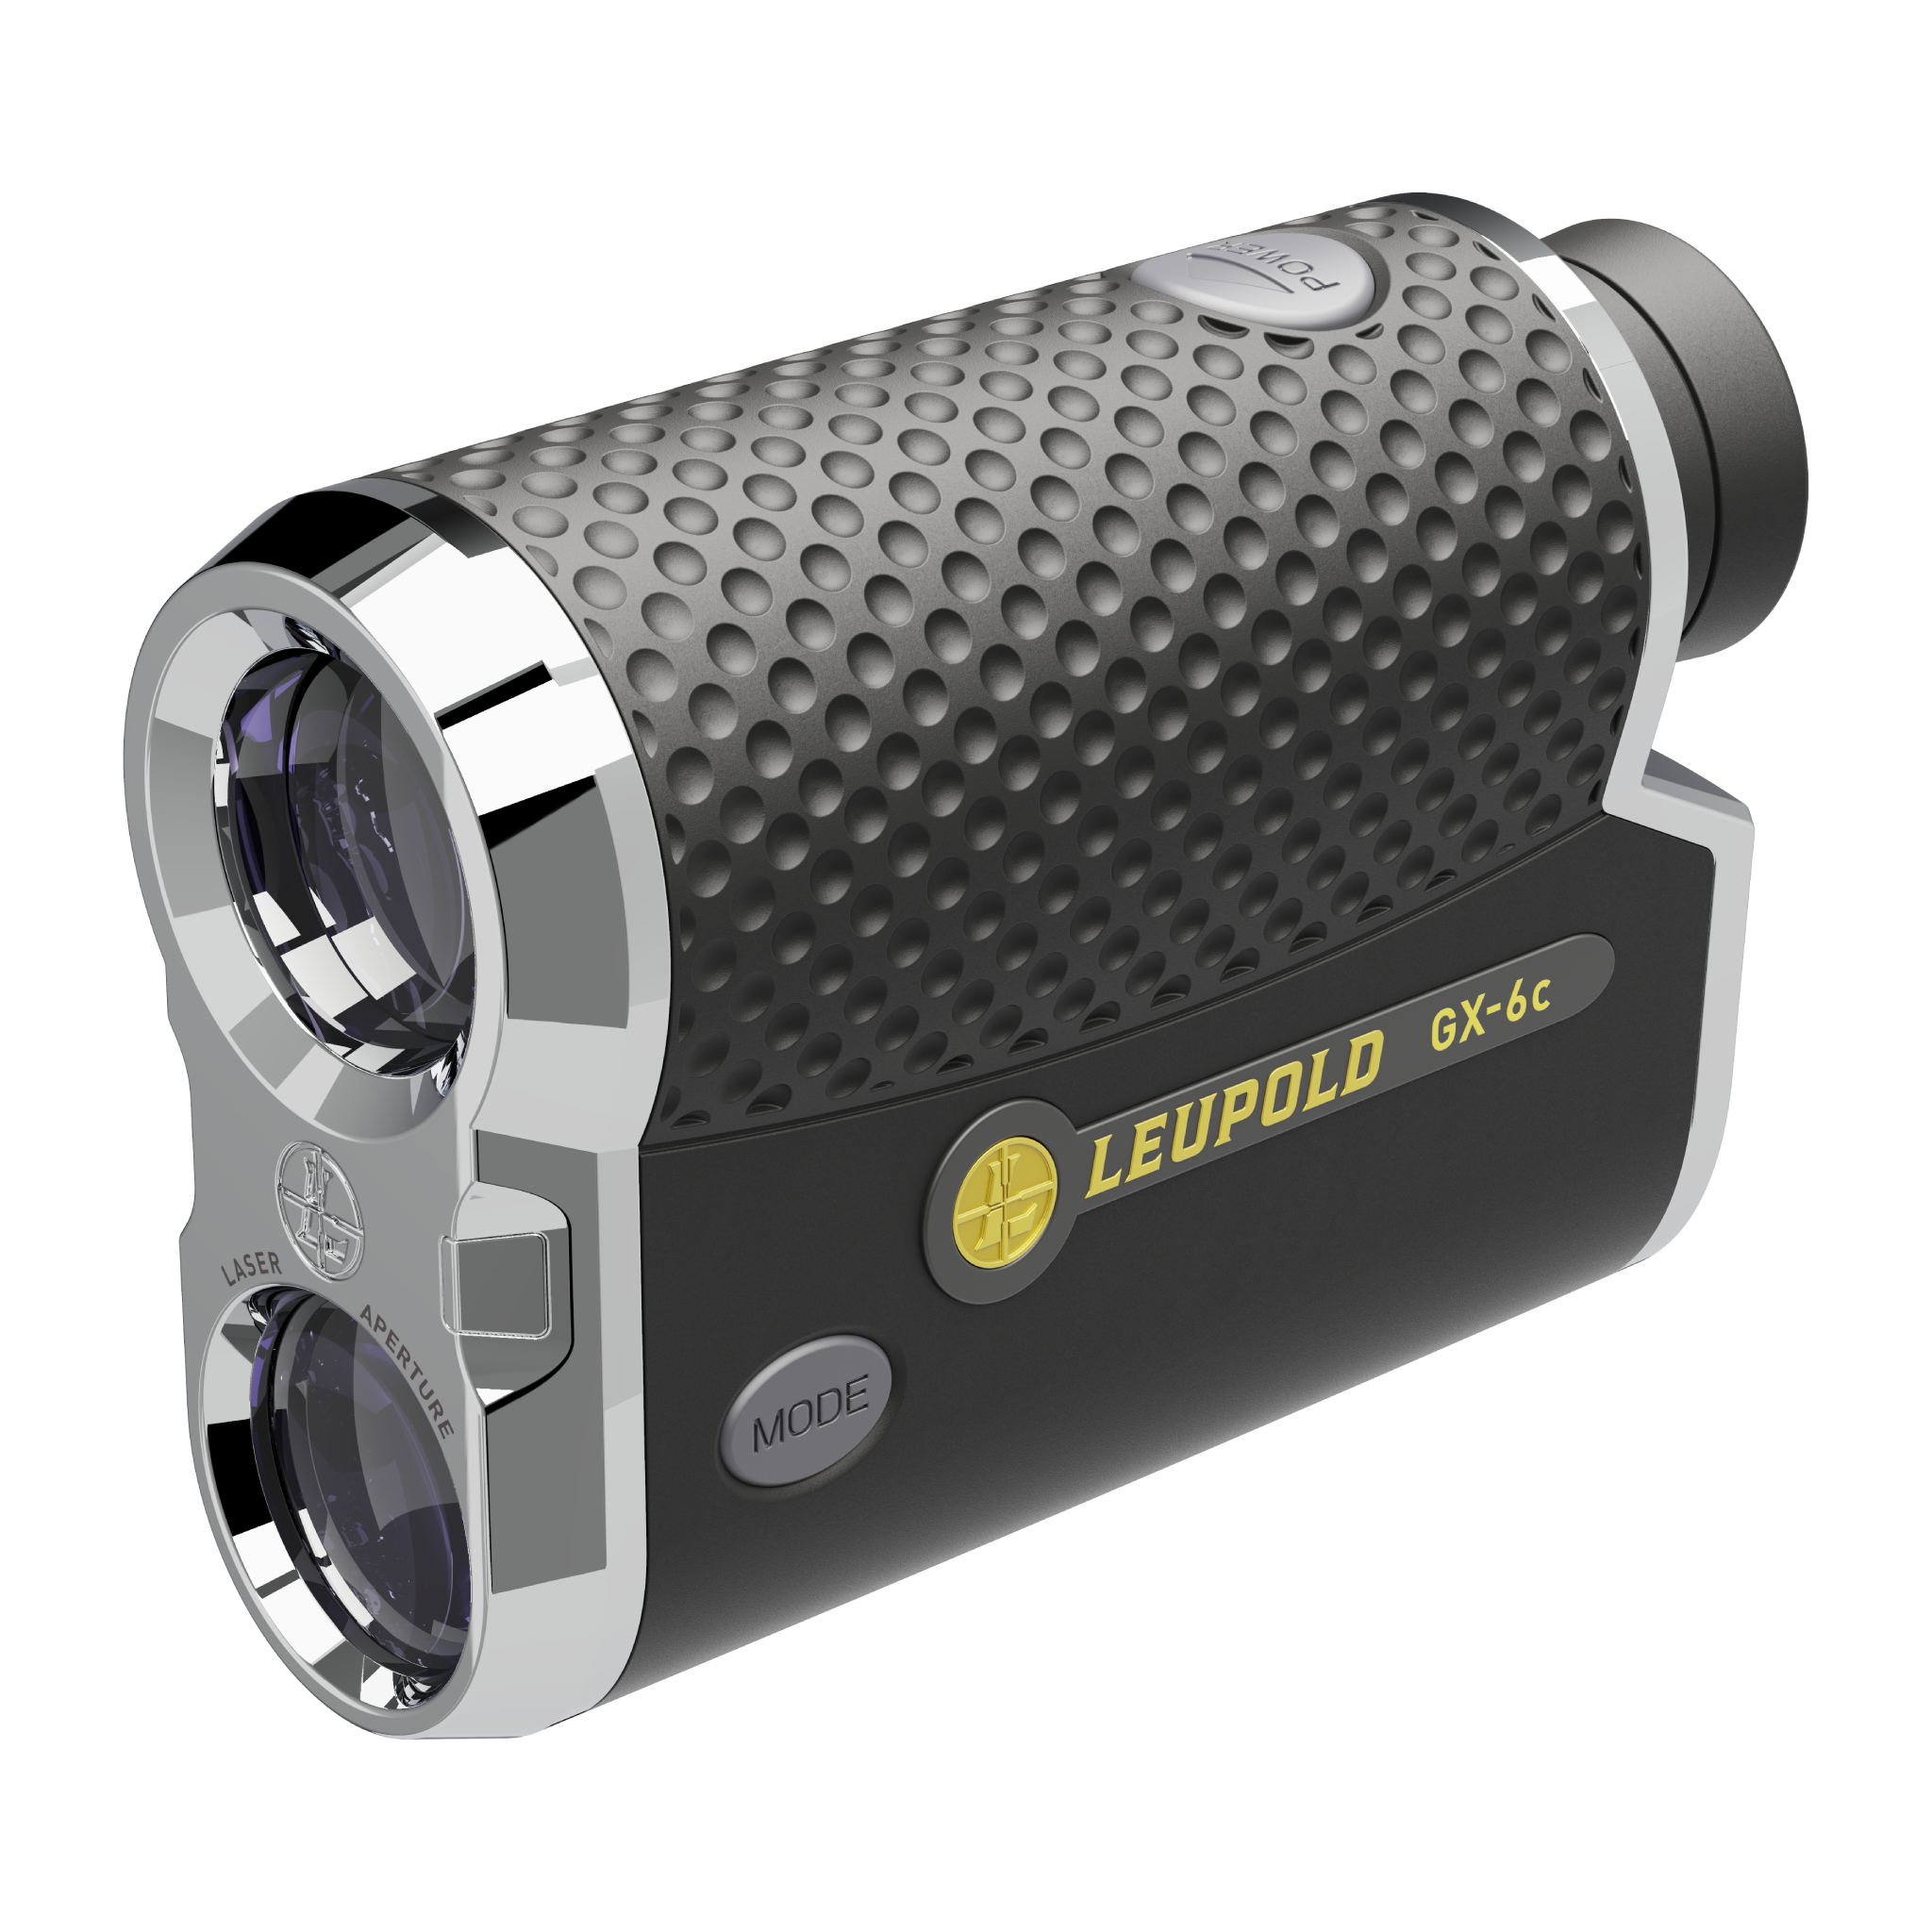 Leupold GX-6c Digital Golf Laser Rangefinder